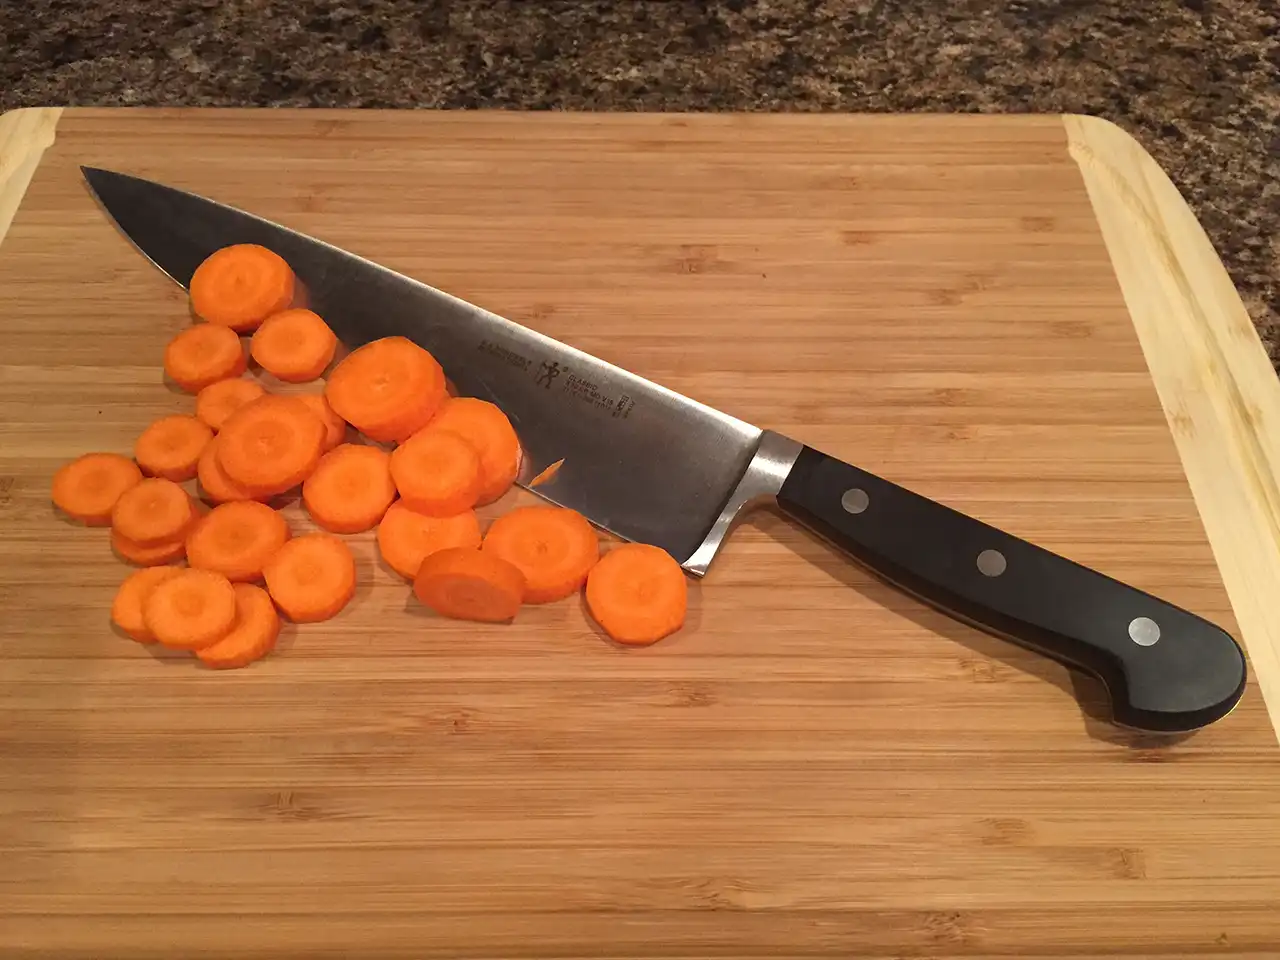 https://steelbluekitchen.com/wp-content/uploads/2021/11/JA-Henckles-Classic-Knife-Cutting-Carrots.webp